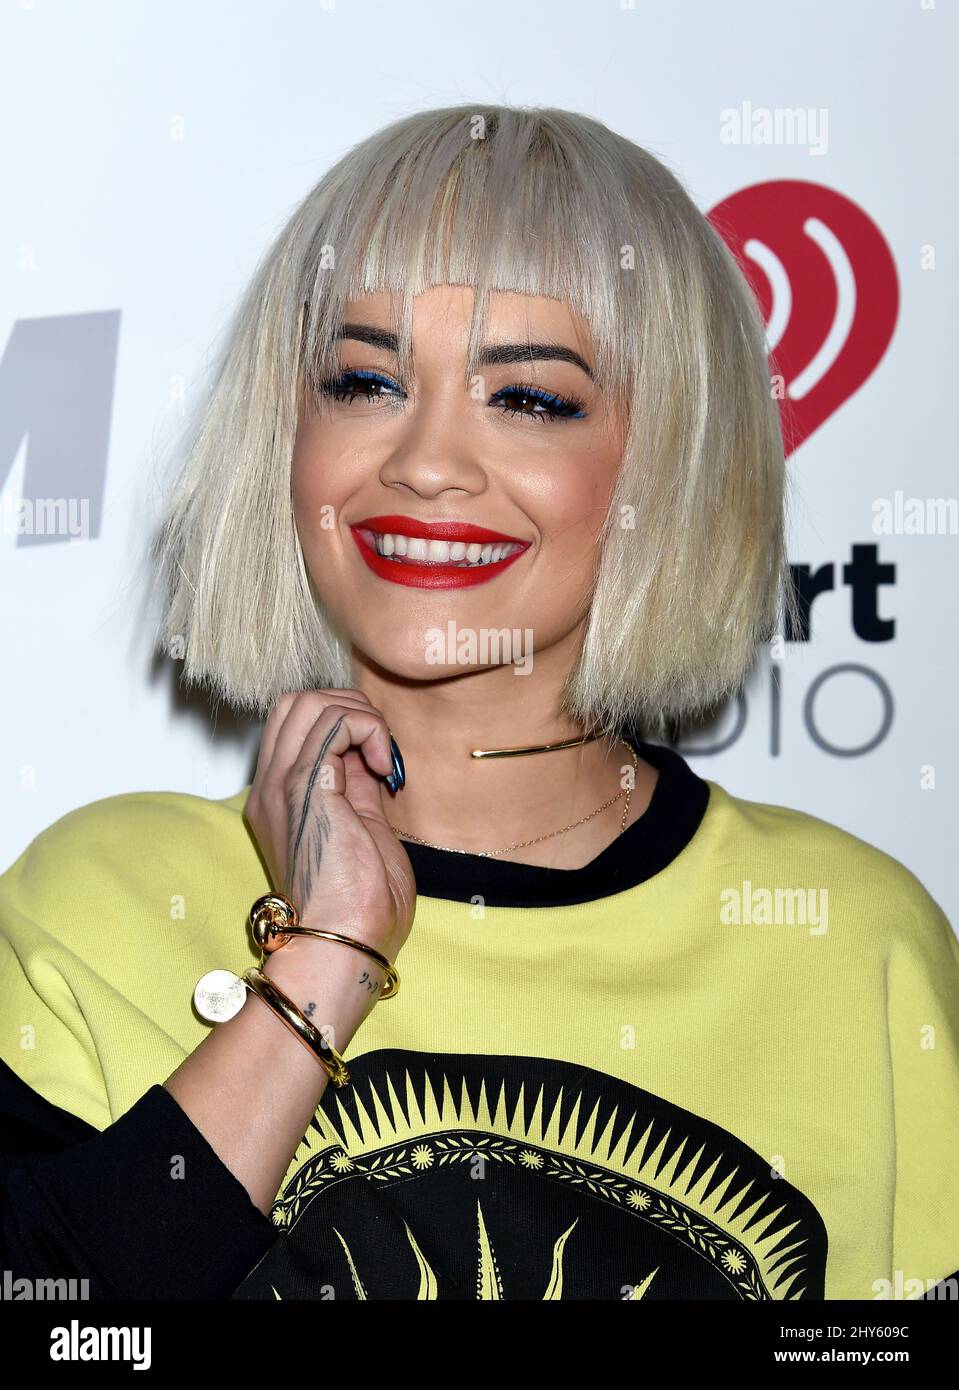 Rita Ora arrives for KIIS FM's Jingle Ball concert held at Staples Center, Los Angeles. Stock Photo